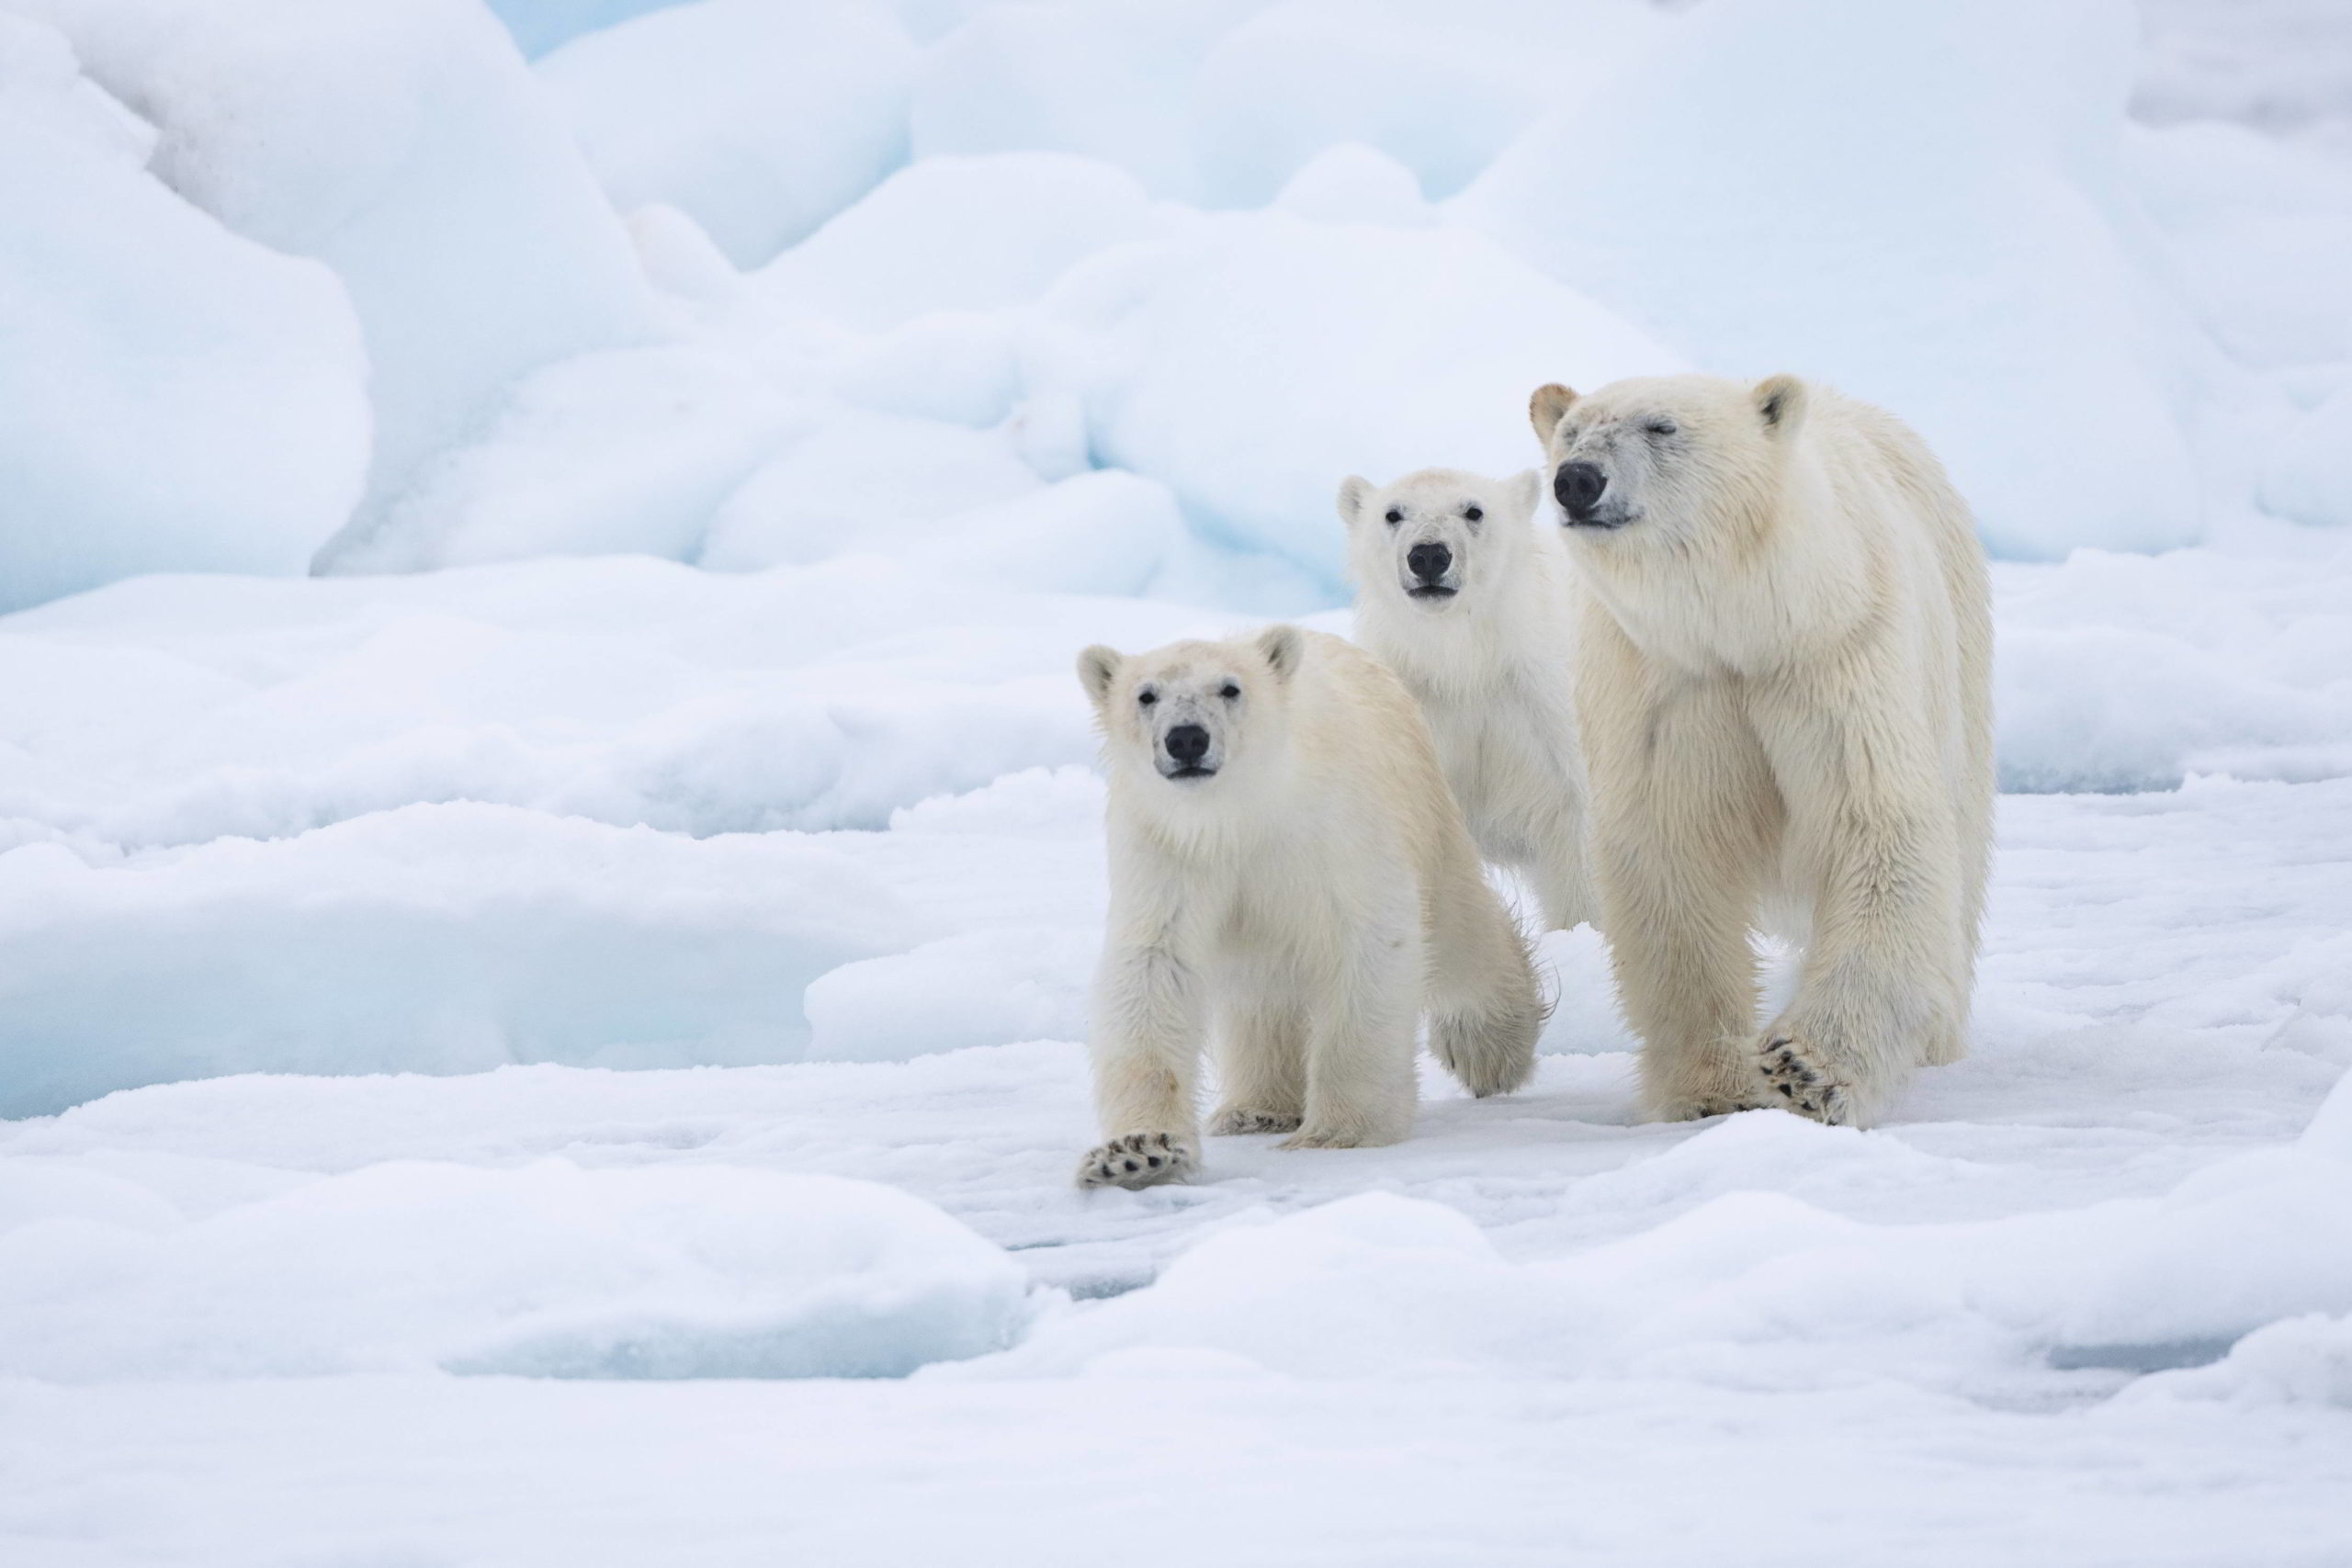 https://wwf.ca/wp-content/uploads/2020/02/Polar-bear-mother-and-cubs-walking-on-ice-floe.-%C2%A9-Richard-Barrett-_-WWF-UK-scaled.jpg